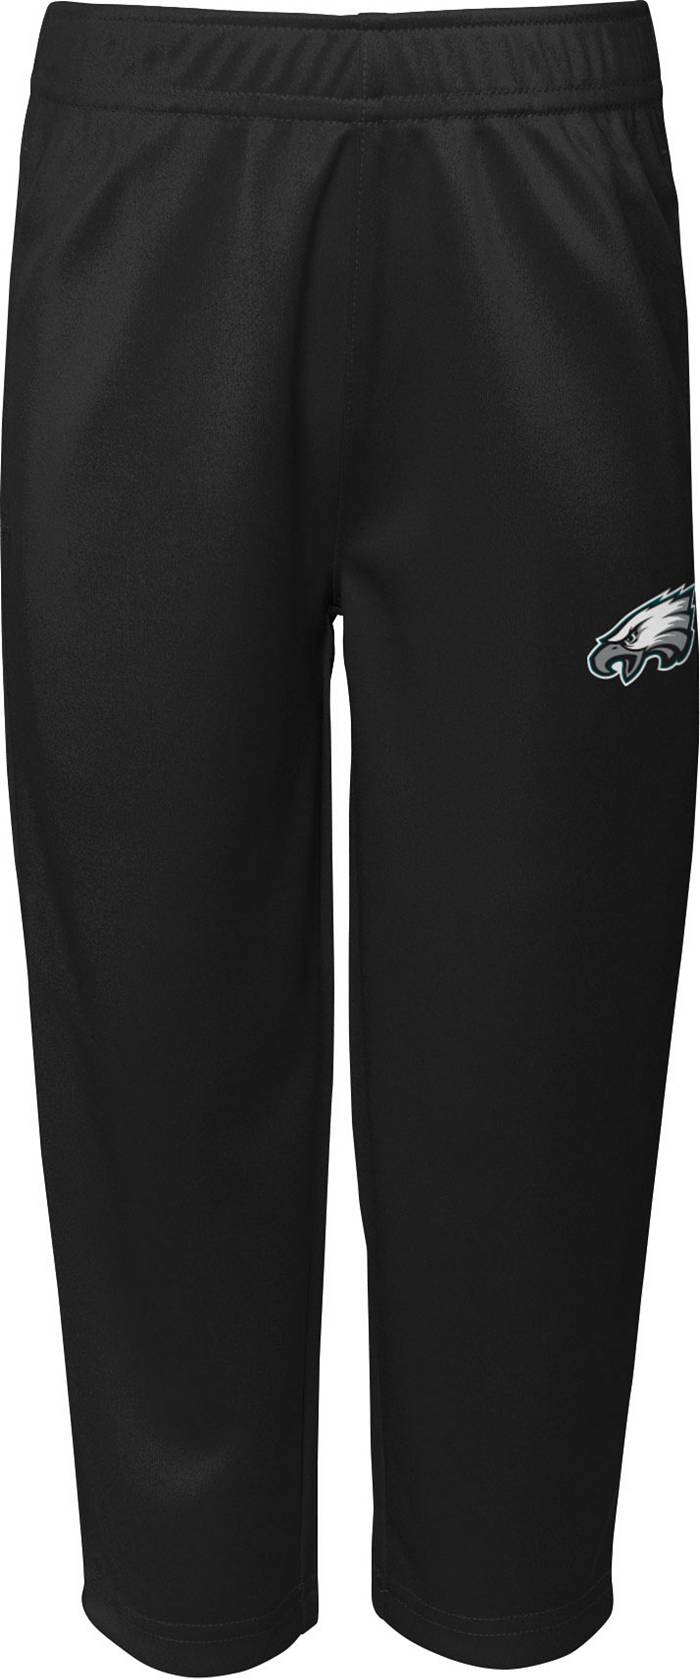 Nike Men's Super Bowl LVII Bound Local (NFL Philadelphia Eagles) Long-Sleeve T-Shirt in Grey, Size: XL | NPAC06F86X-C6X